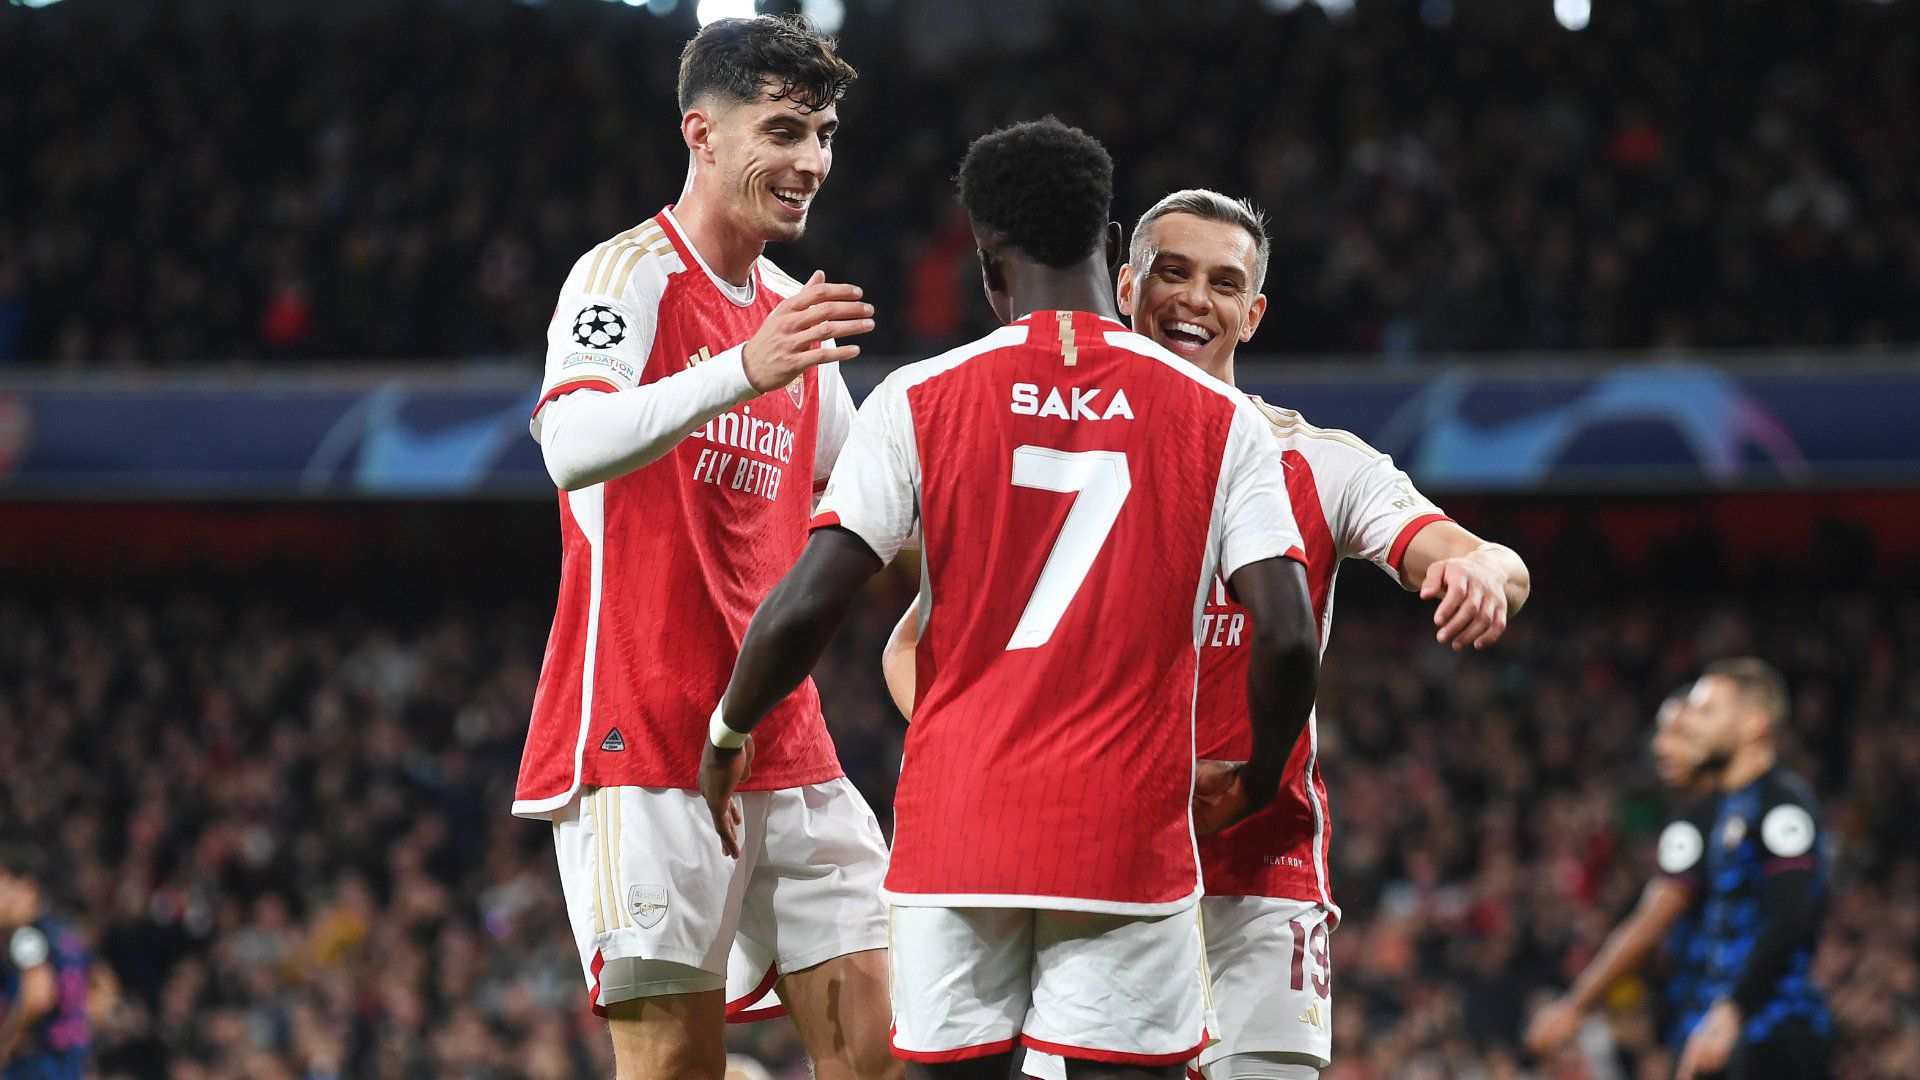 Arsenal v Man City: Five talking points as Premier League top two face off